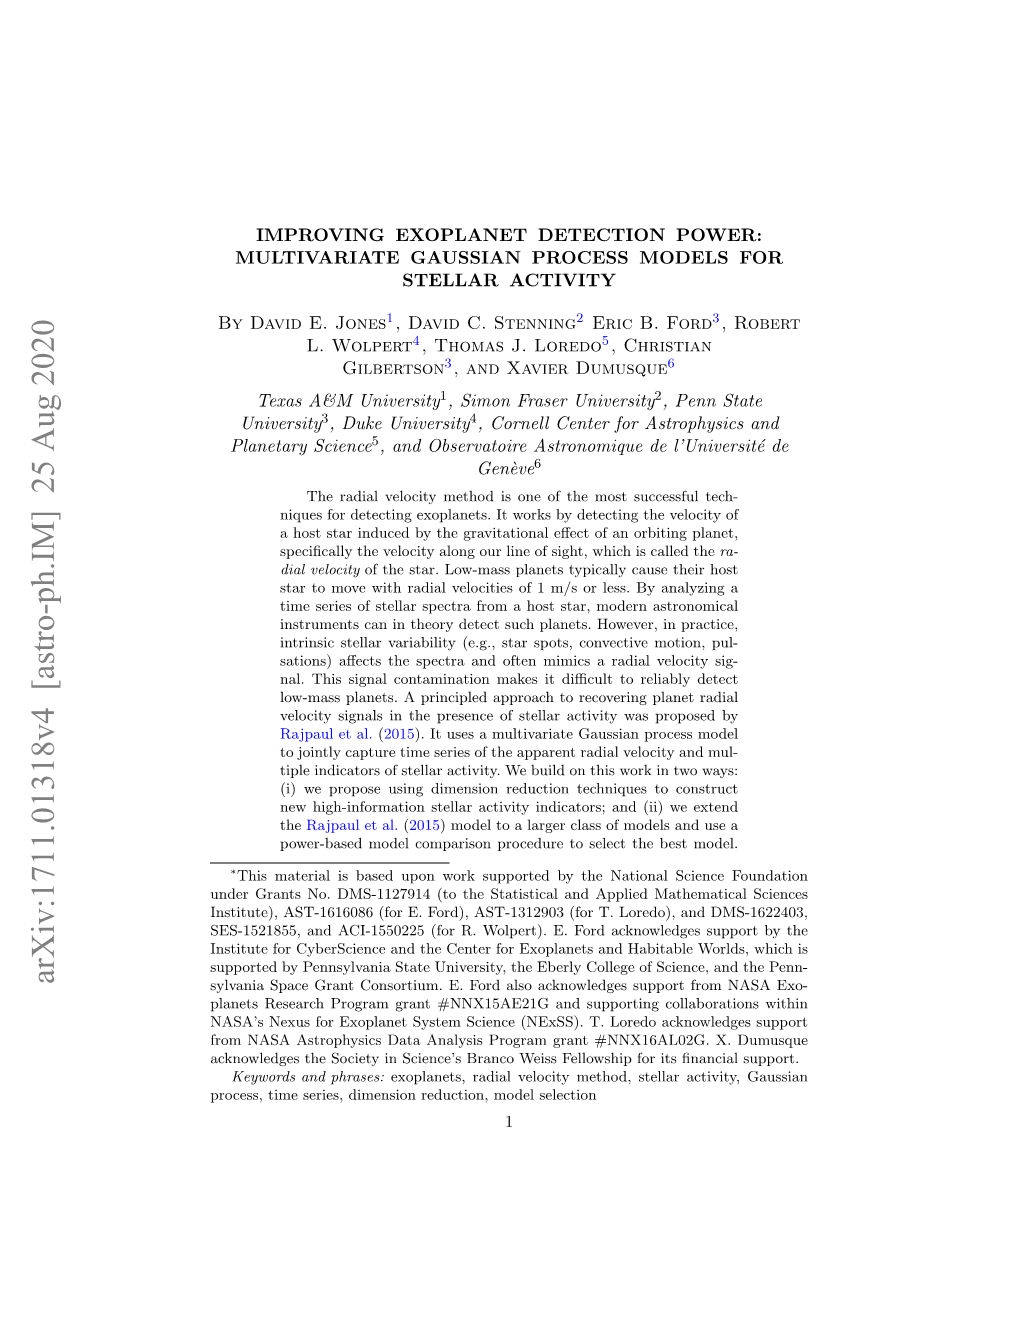 Multivariate Gaussian Process Models for Stellar Activity